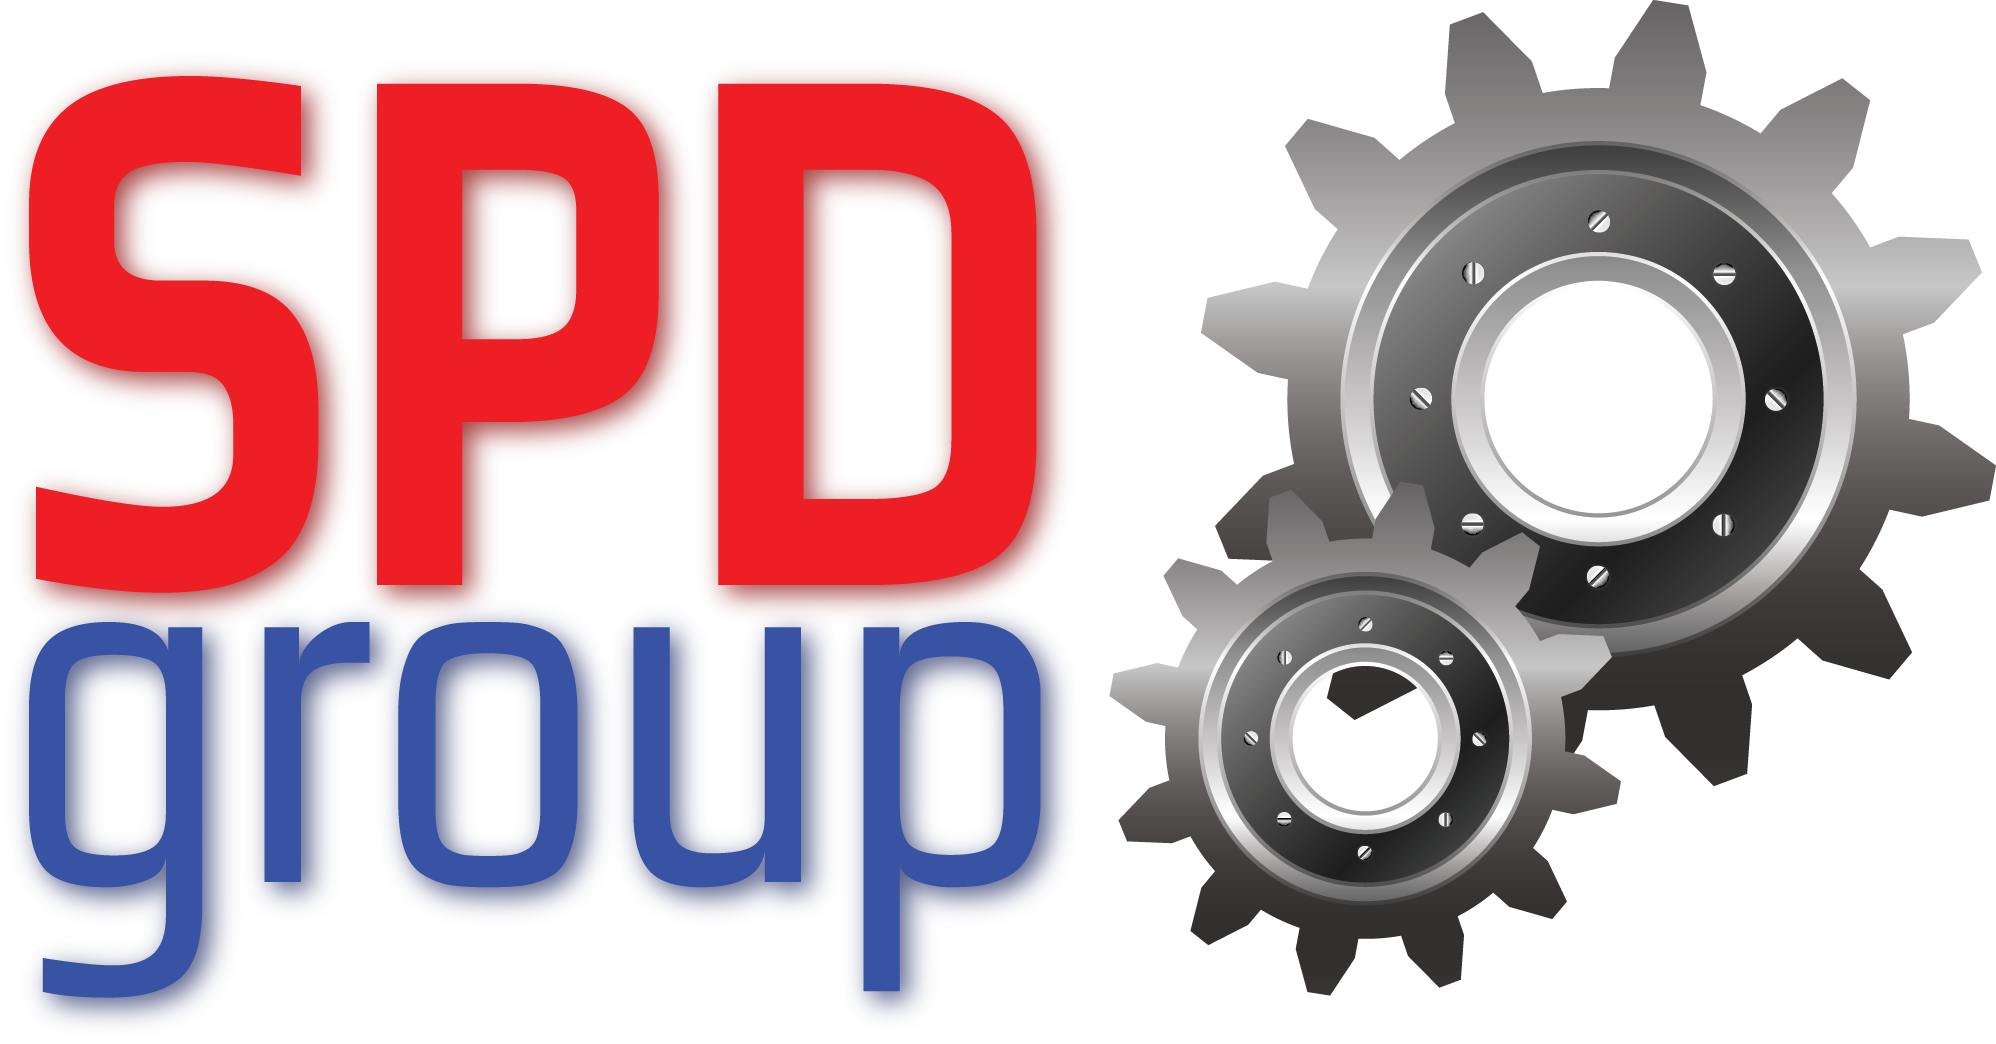 SPD-Group